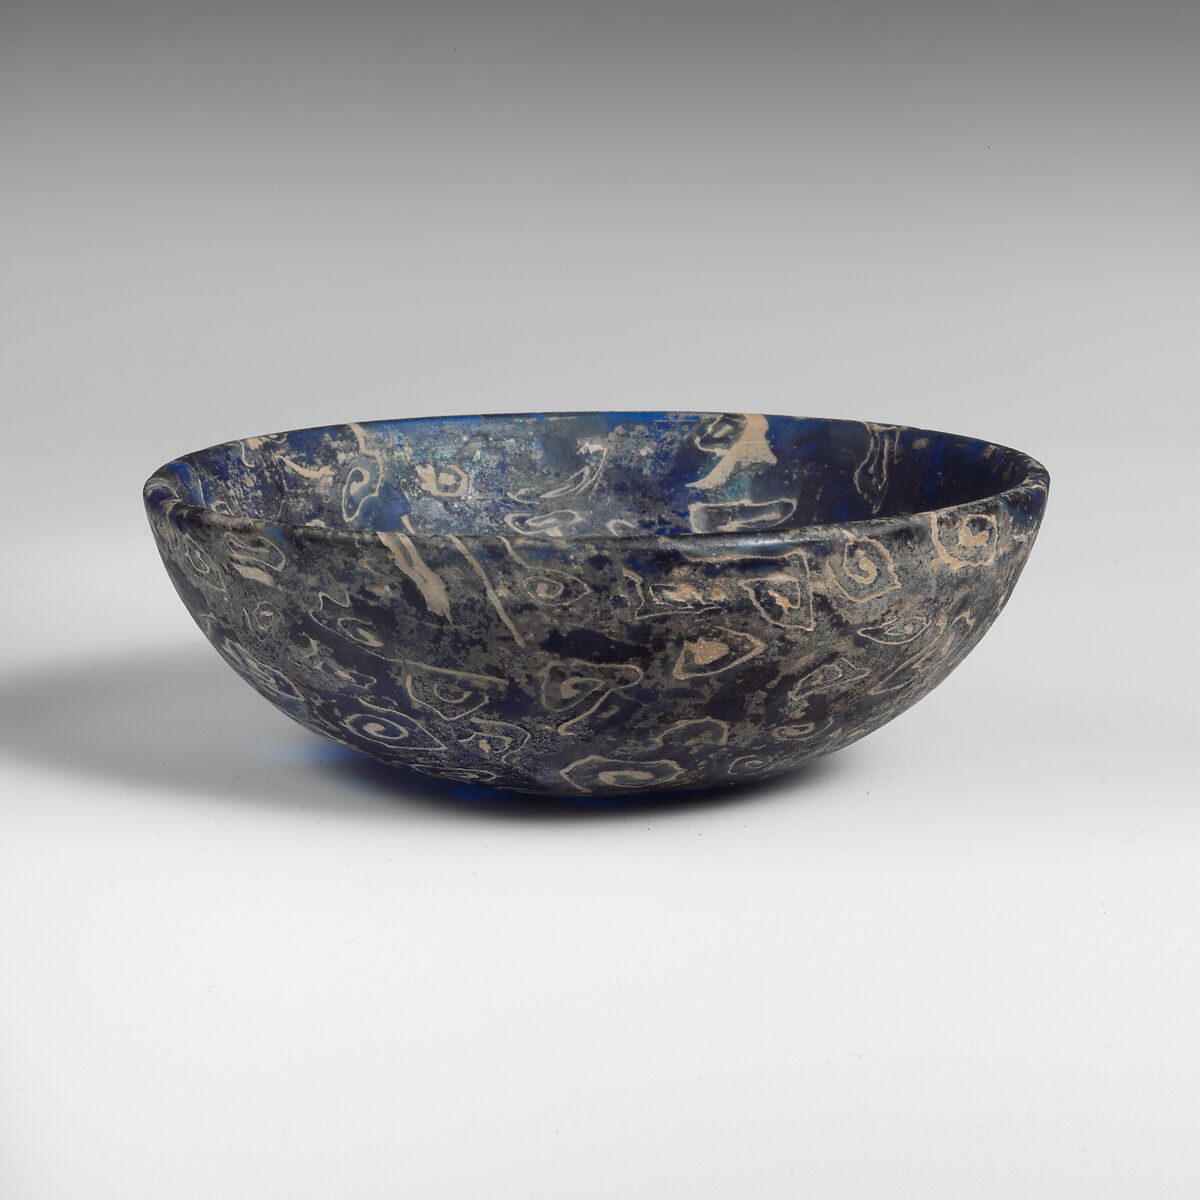 Glass mosaic bowl, Glass, Roman, probably Italian 